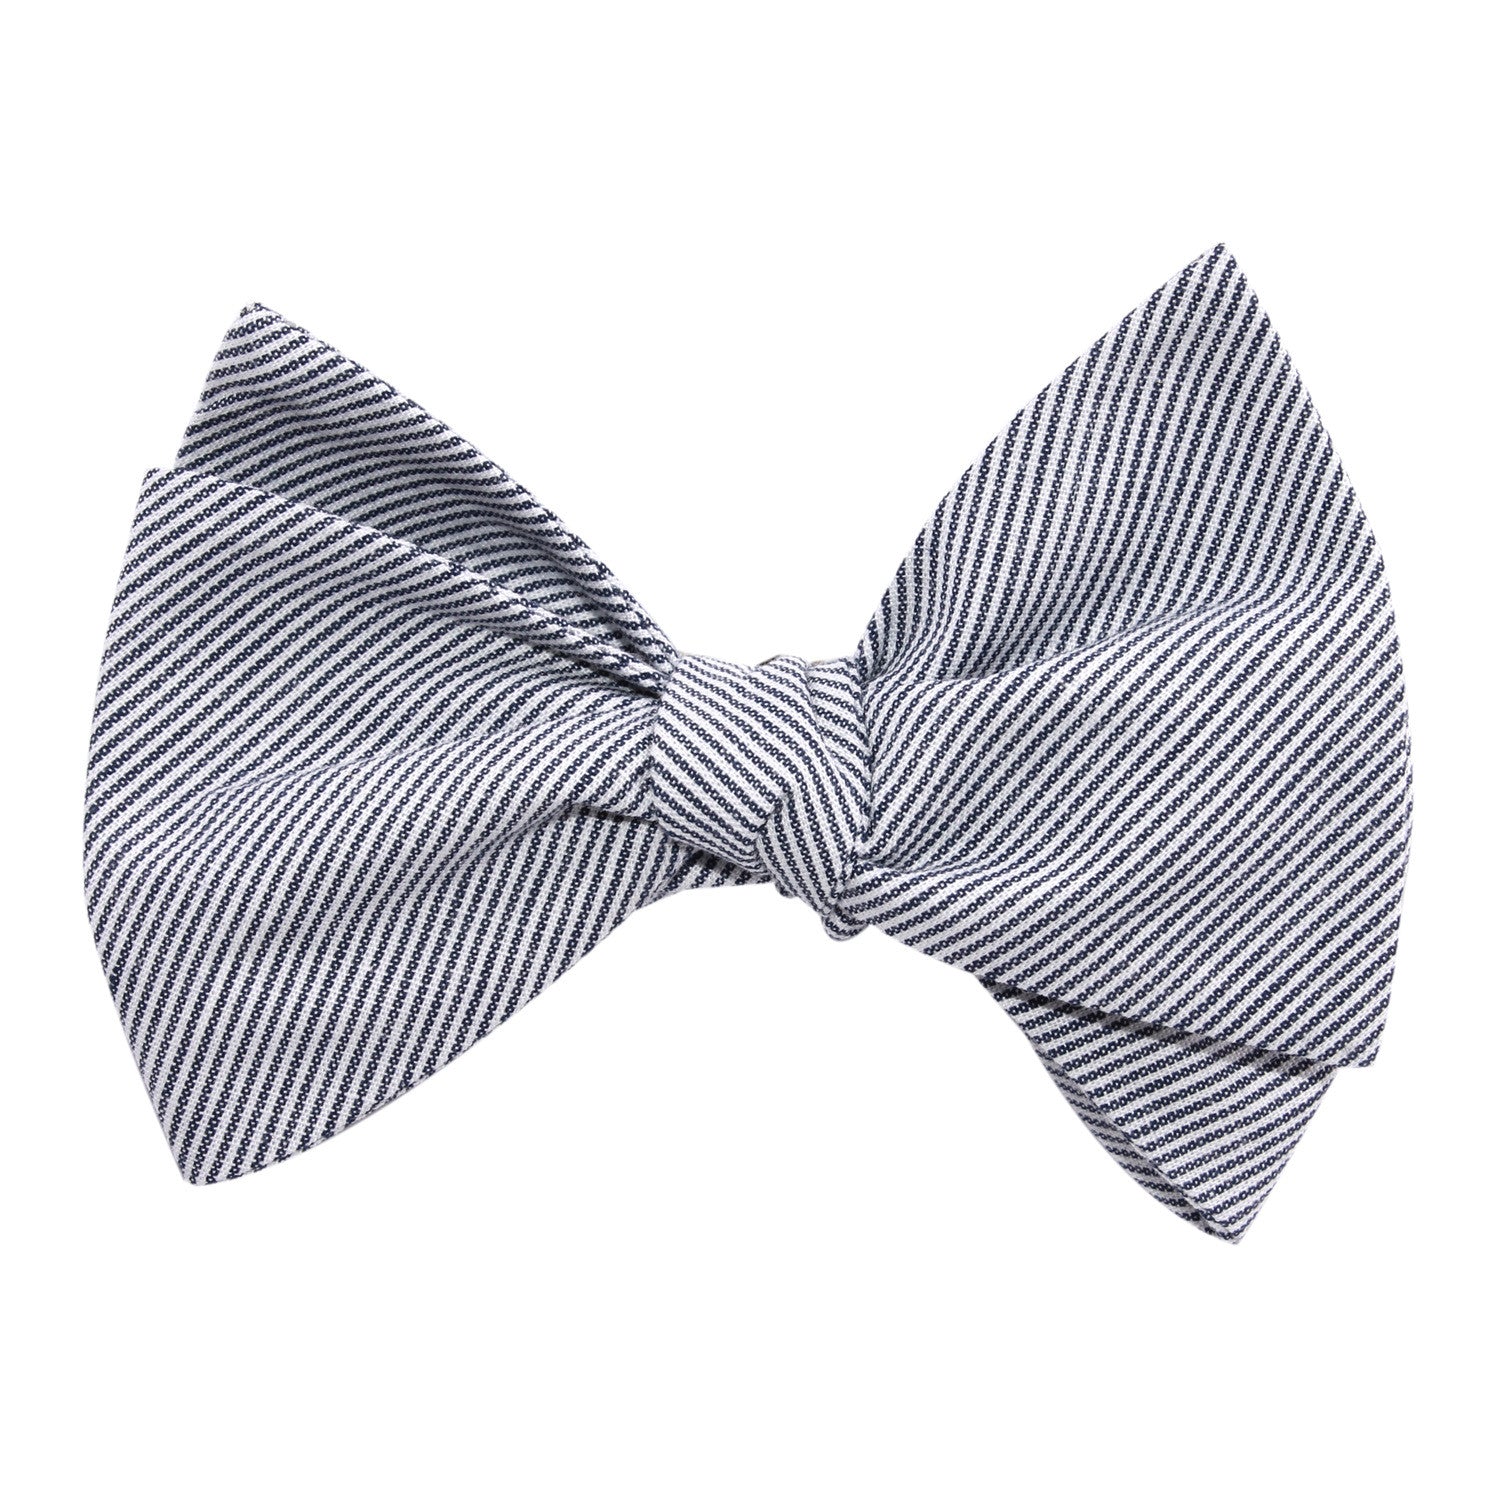 Black and White Pinstripe Cotton Self Tie Bow Tie 2